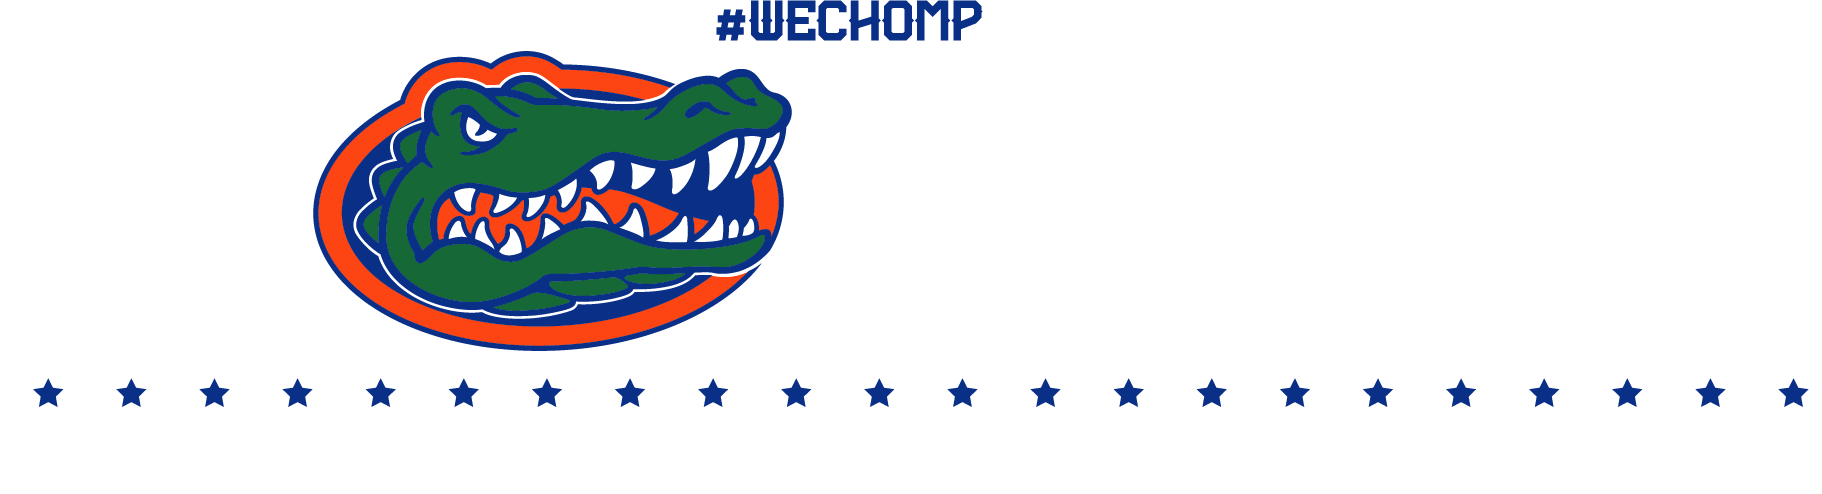 #wechomp In Chompville, Texas - Florida Gators (1822x494)